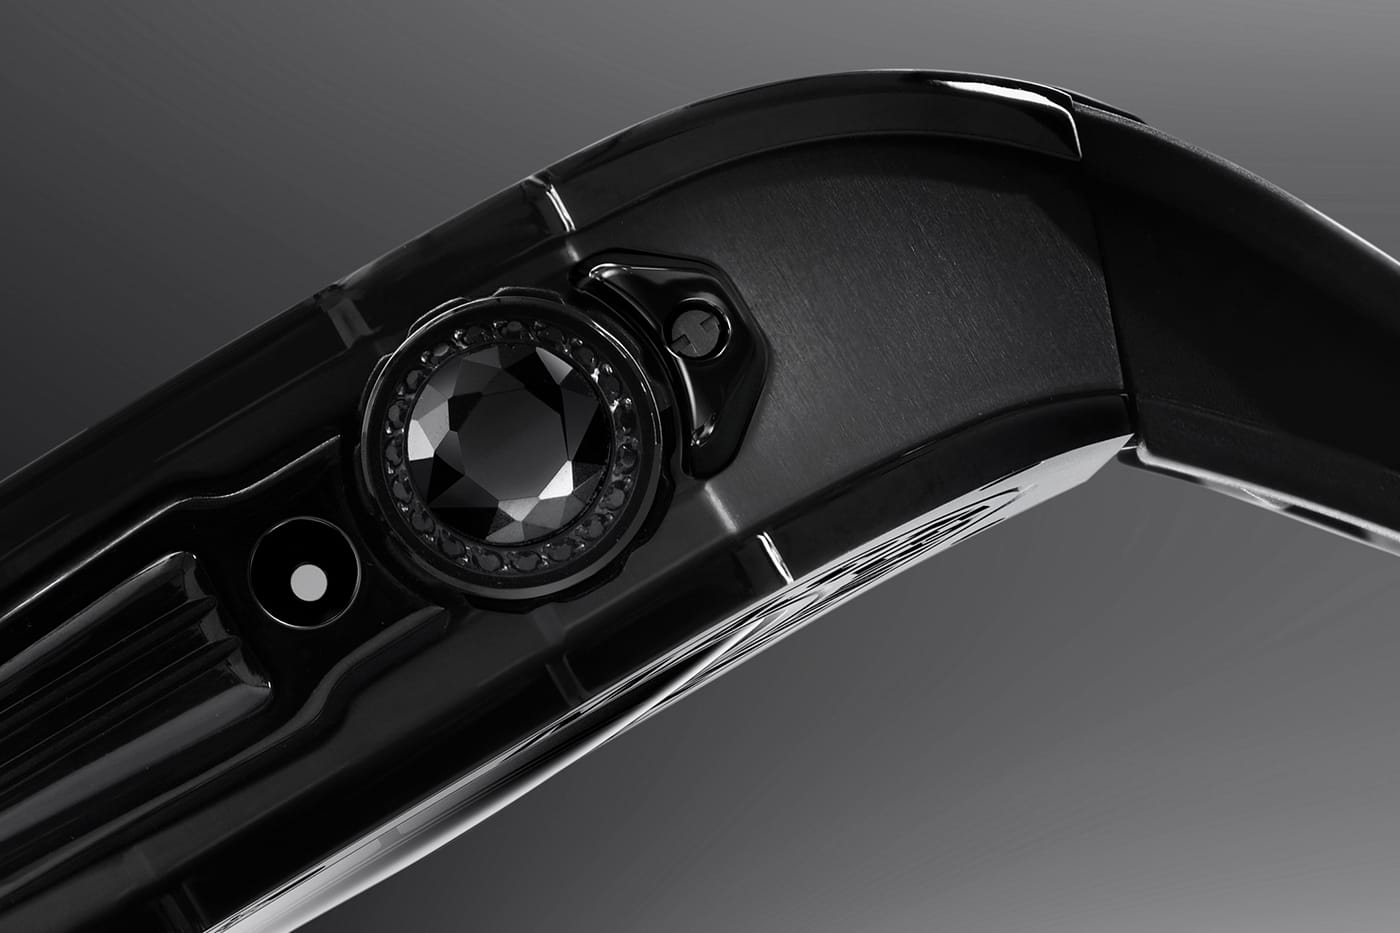 Golden Concept mastermind JAPAN Apple Watch Case | Hypebeast